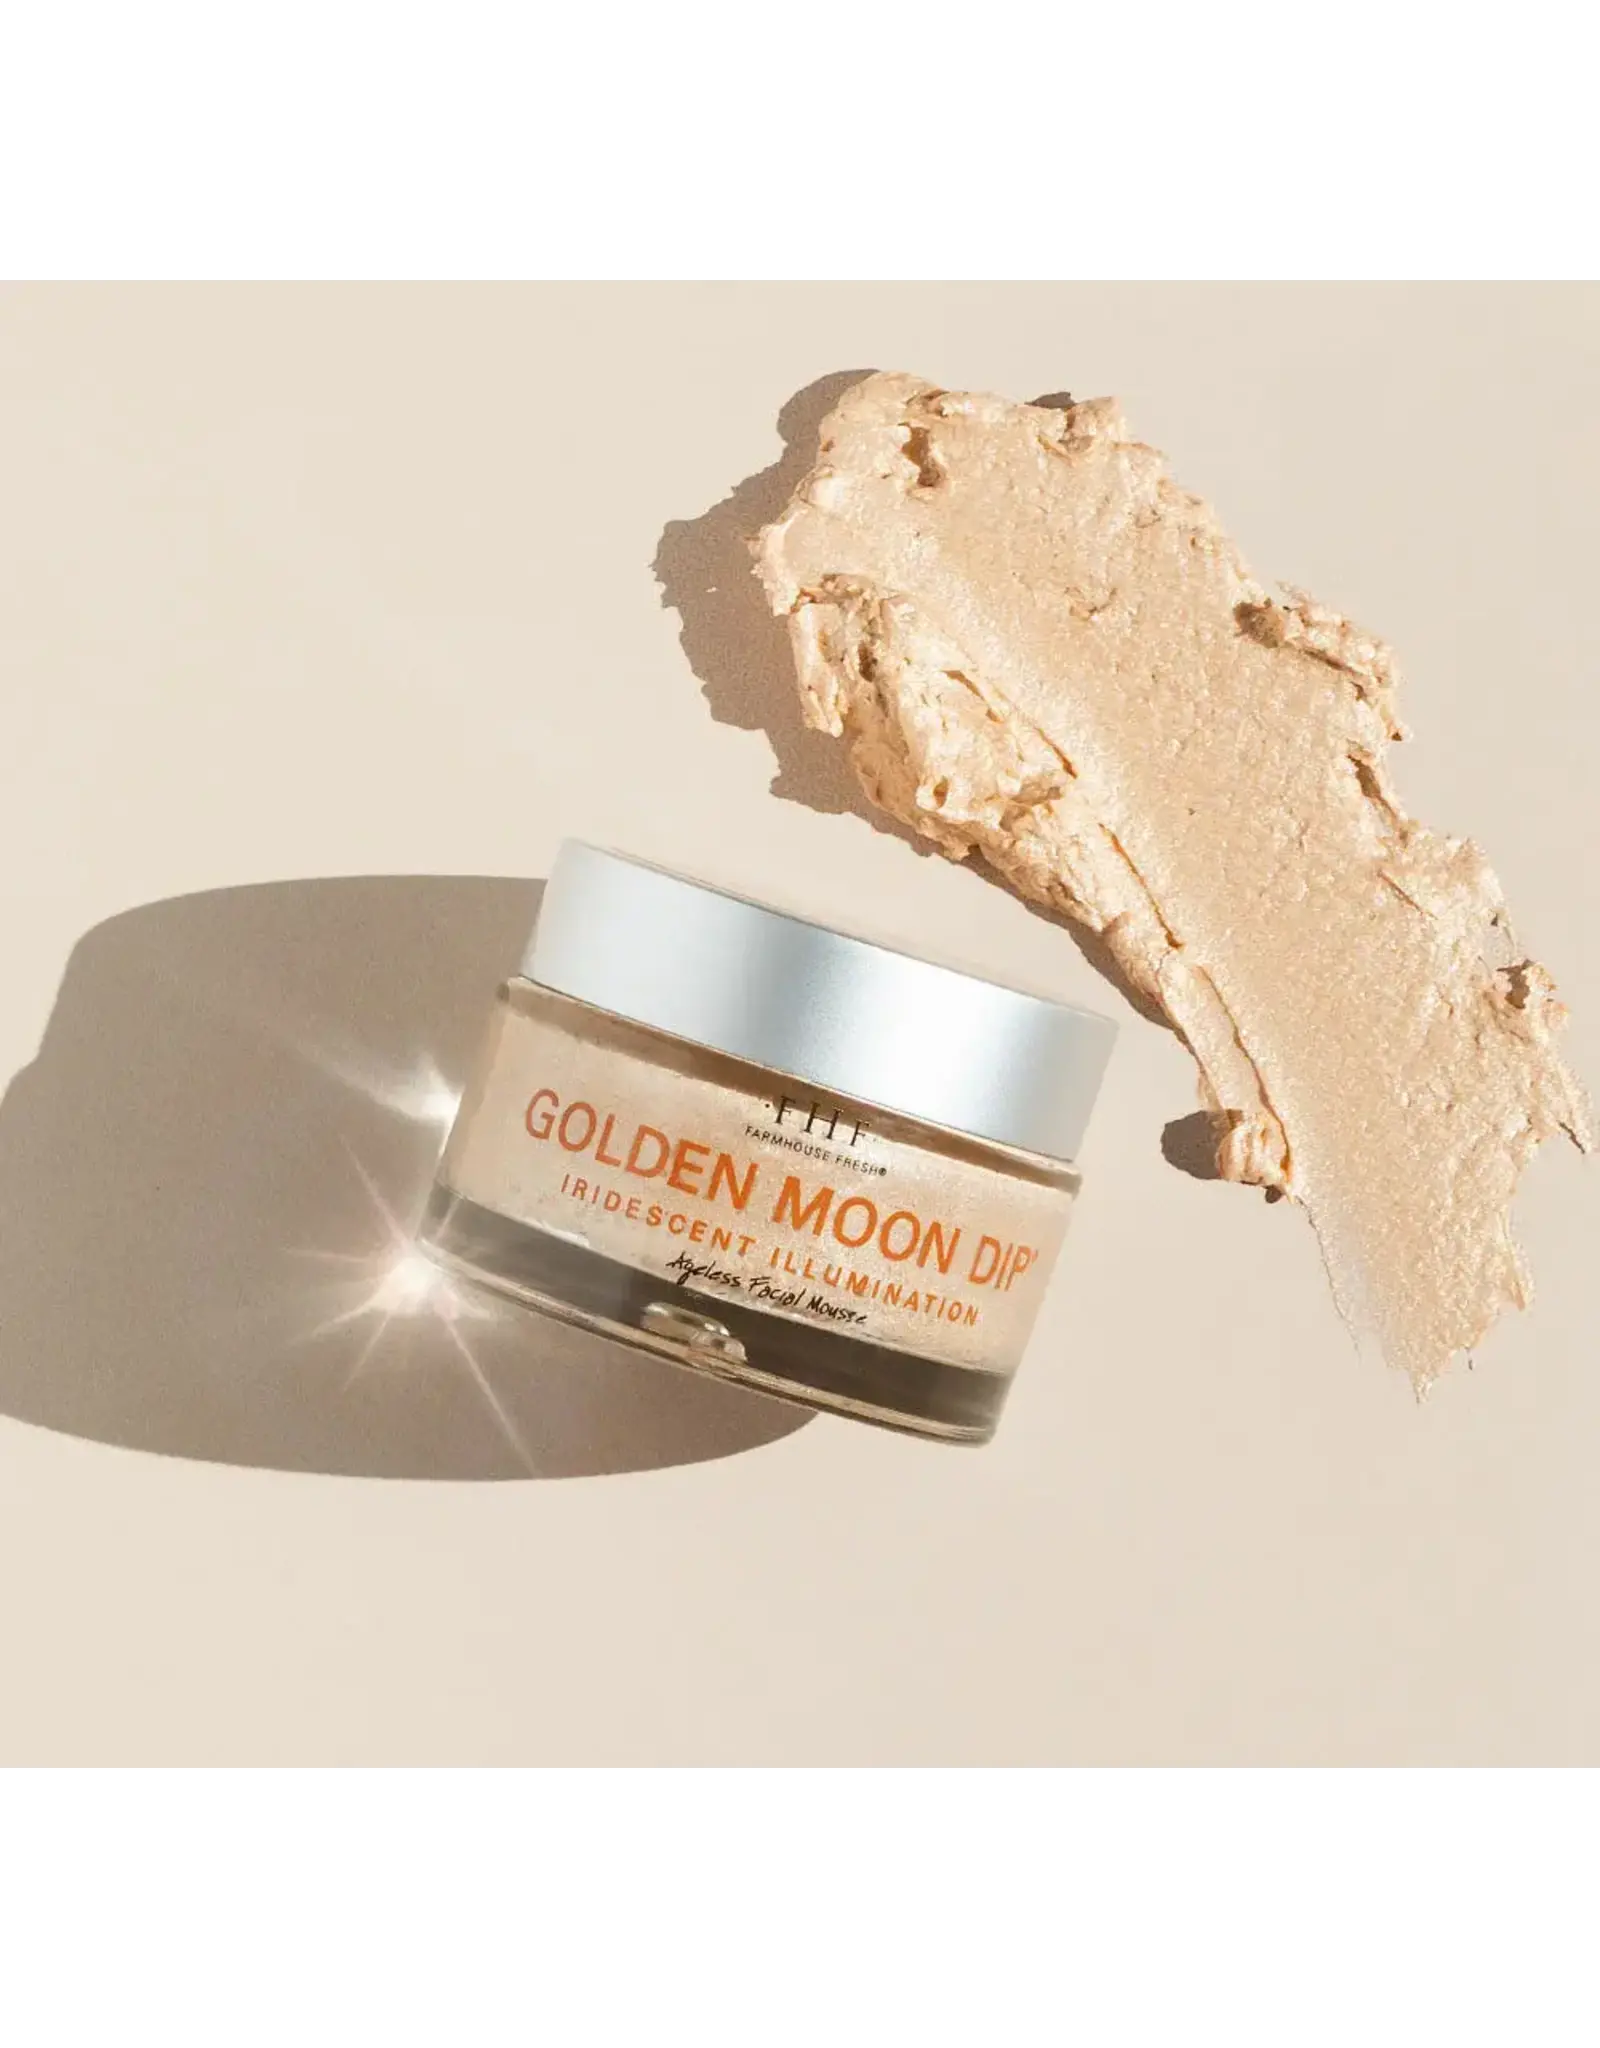 Farmhouse Fresh Golden Moon Dip® Illumination Mousse with Retinol + Wrinkle-Targeting Peptides